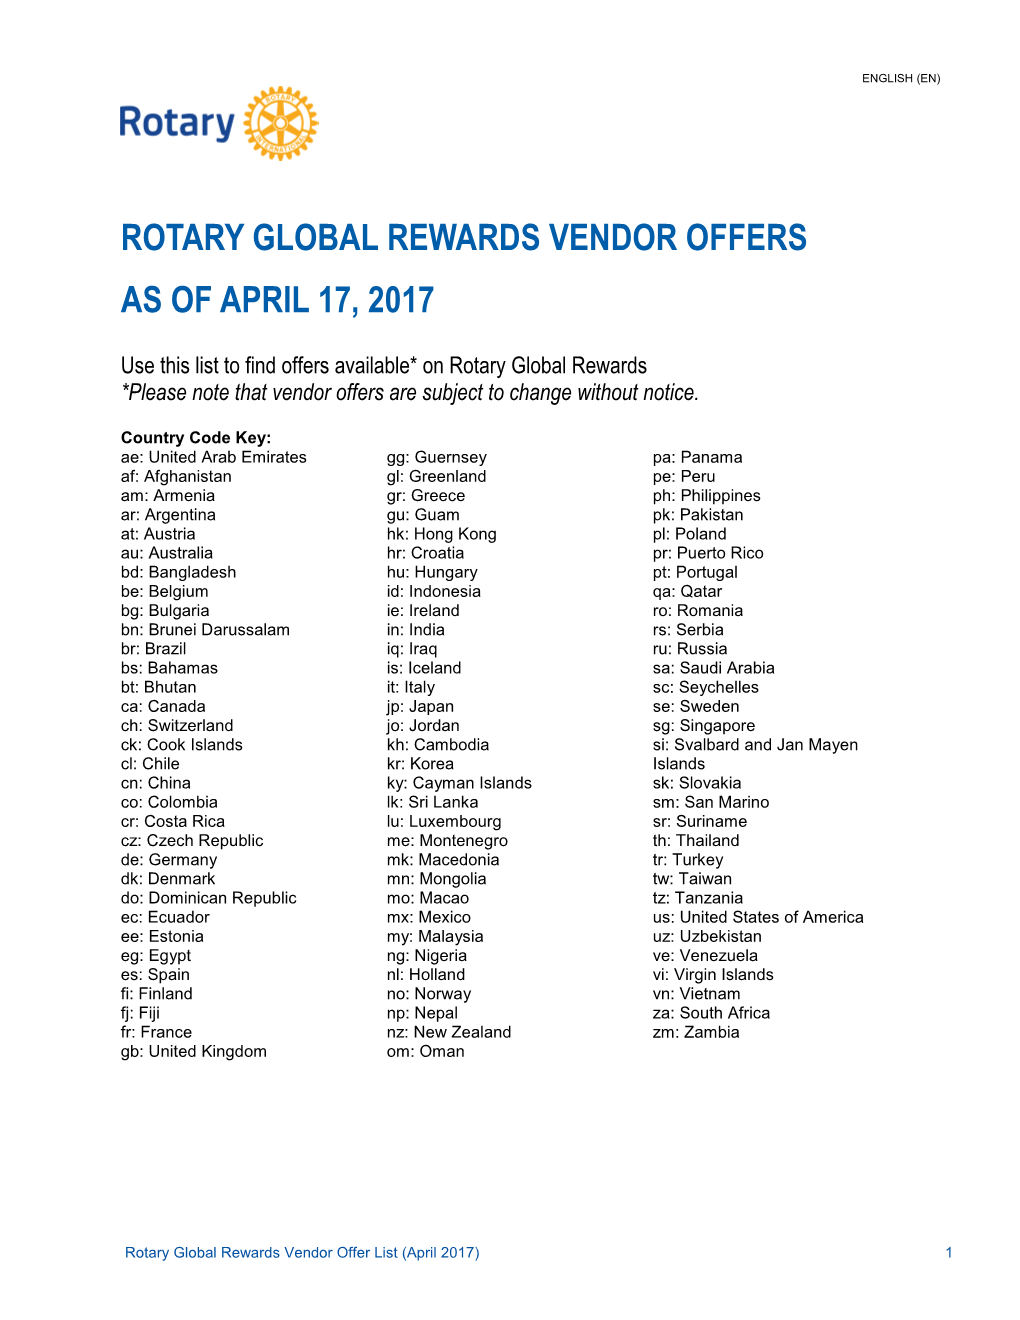 Rotary Global Rewards Vendor List Apr2017 EN